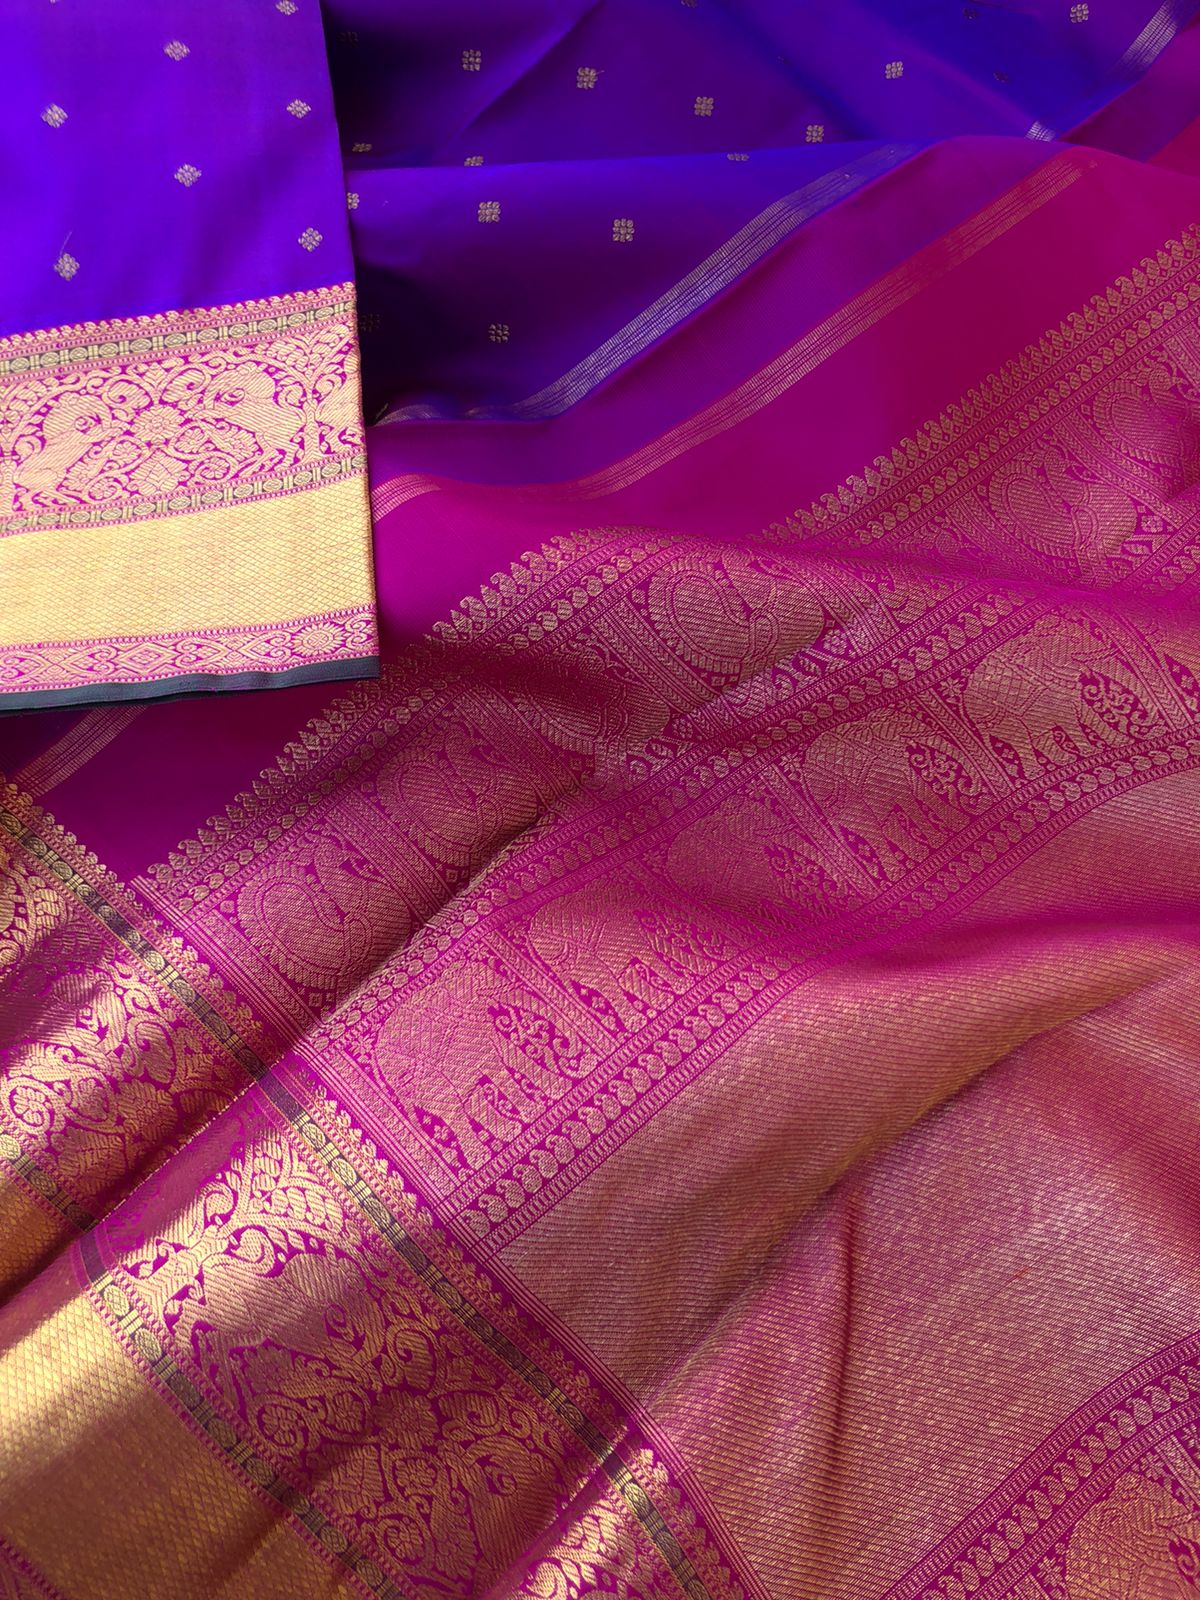 Swarnam - Heirloom Kanchivarams - dual tone violet blue pink authentic Kanchivaram with kuyil kann and yali woven double pett borders and stunning pallu